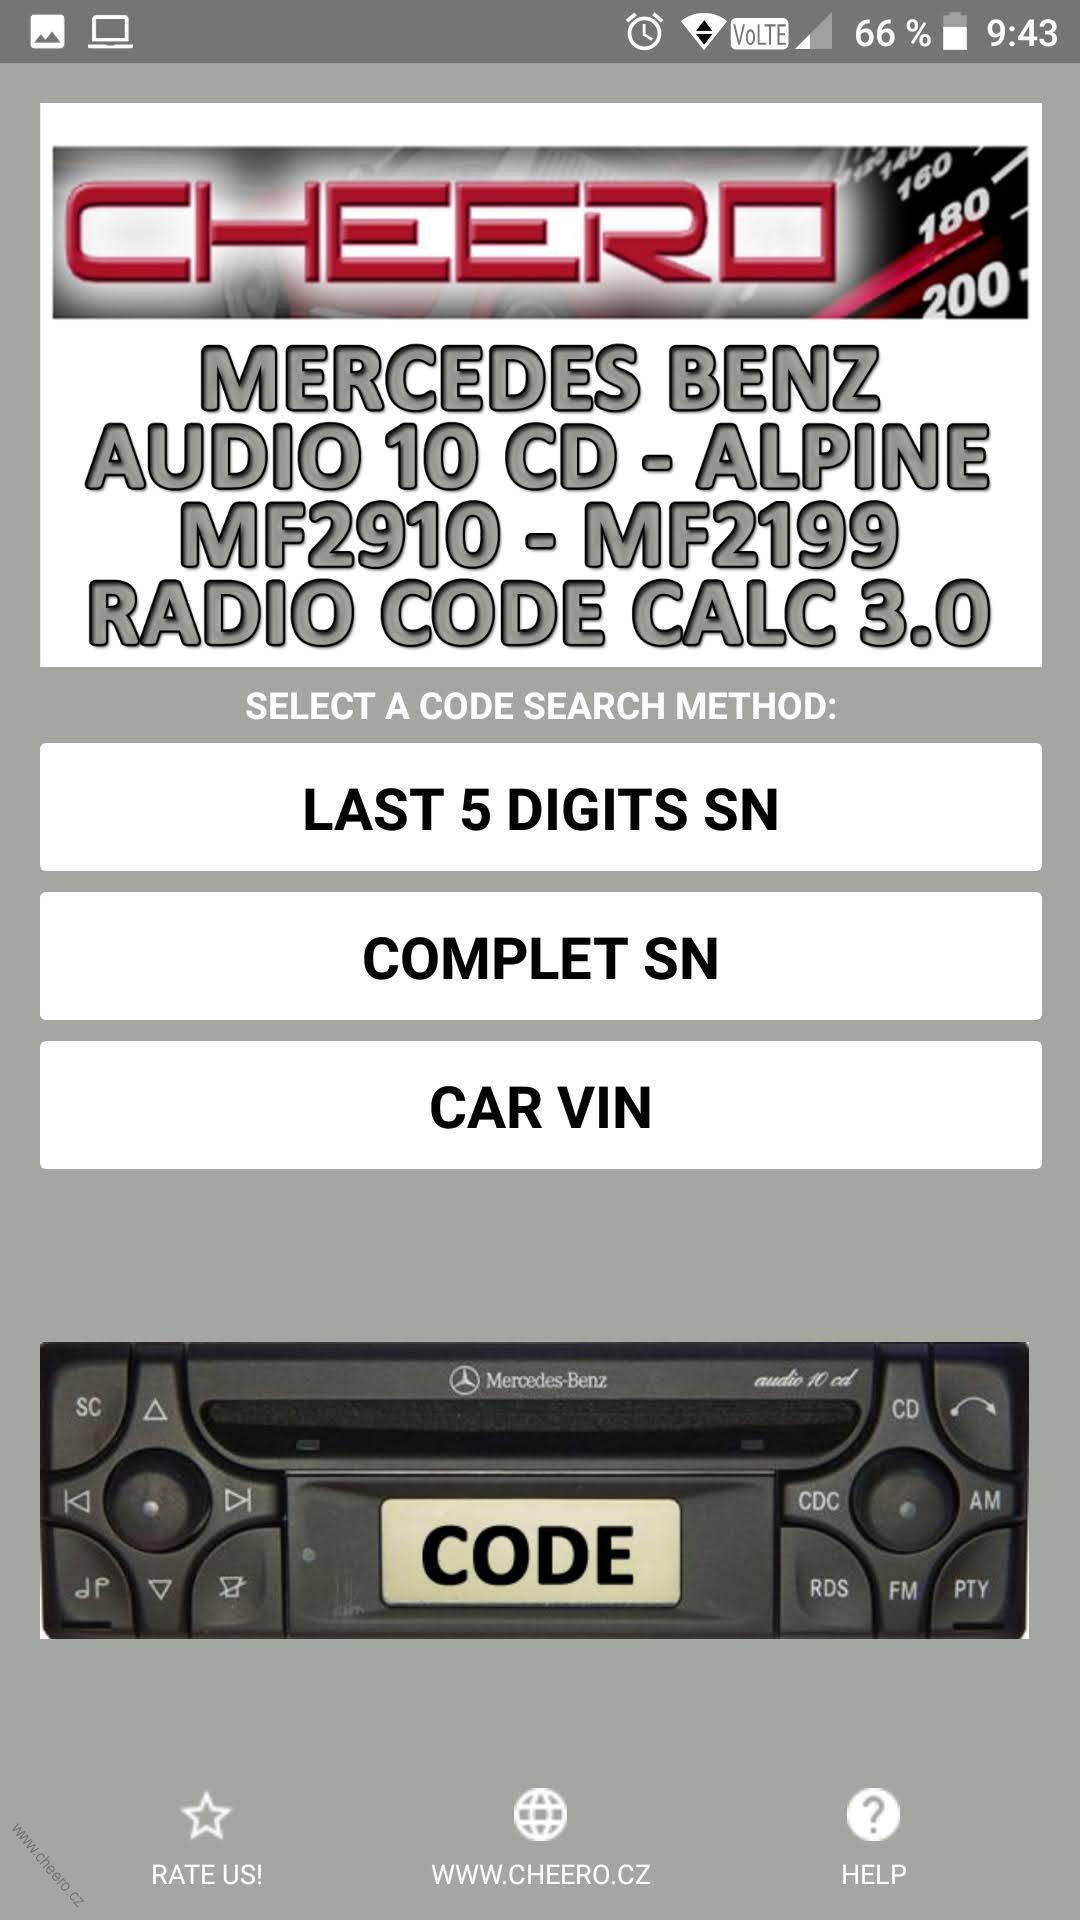 MERCEDES BENZ RADIO CODE ALPINE MF2910 MF2199 AUDIO 10 CD